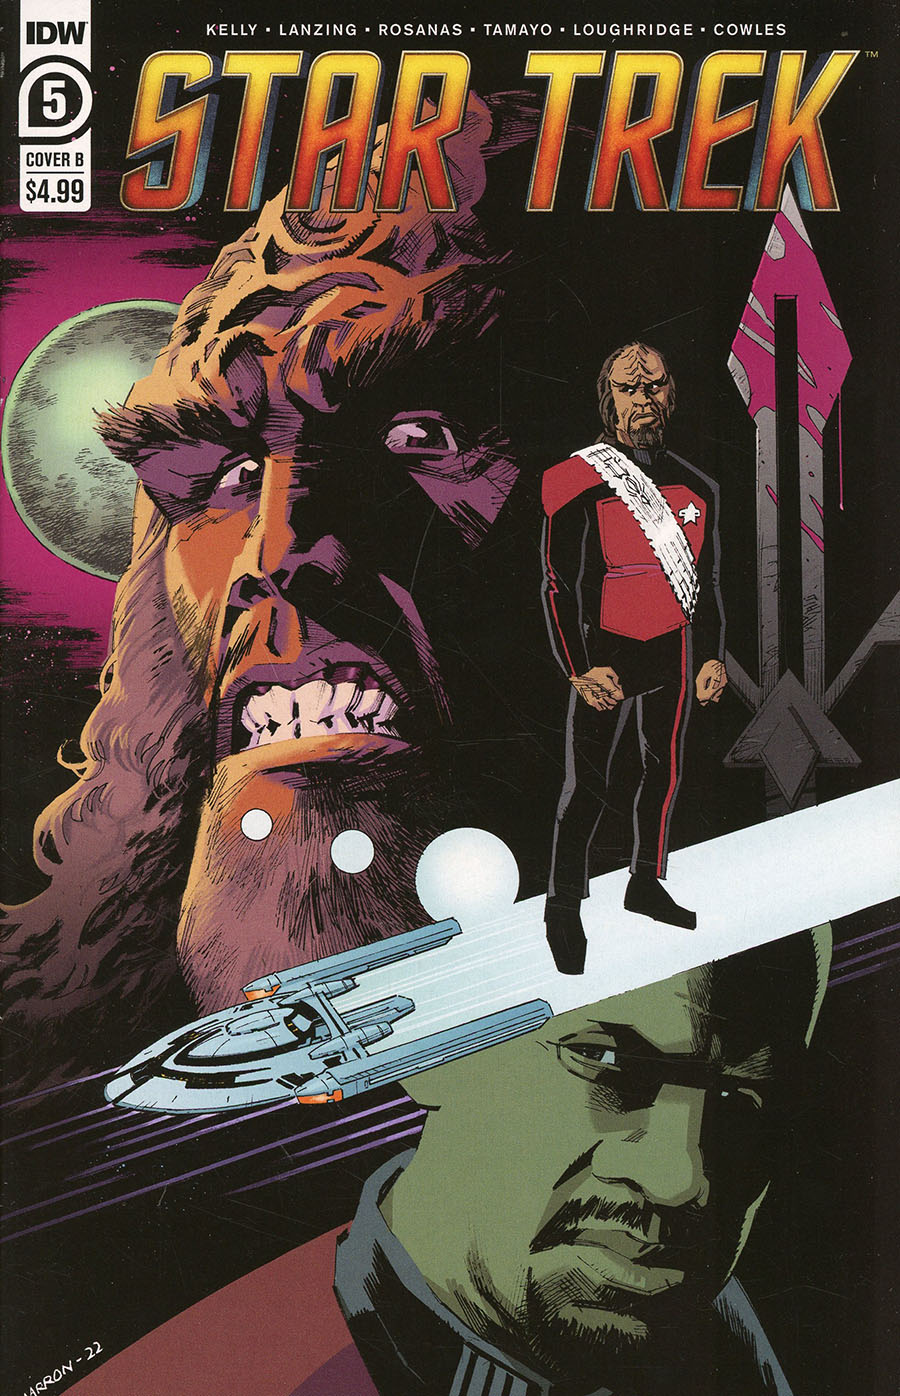 Star Trek (IDW) Vol 2 #5 Cover B Variant Eoin Marron Cover